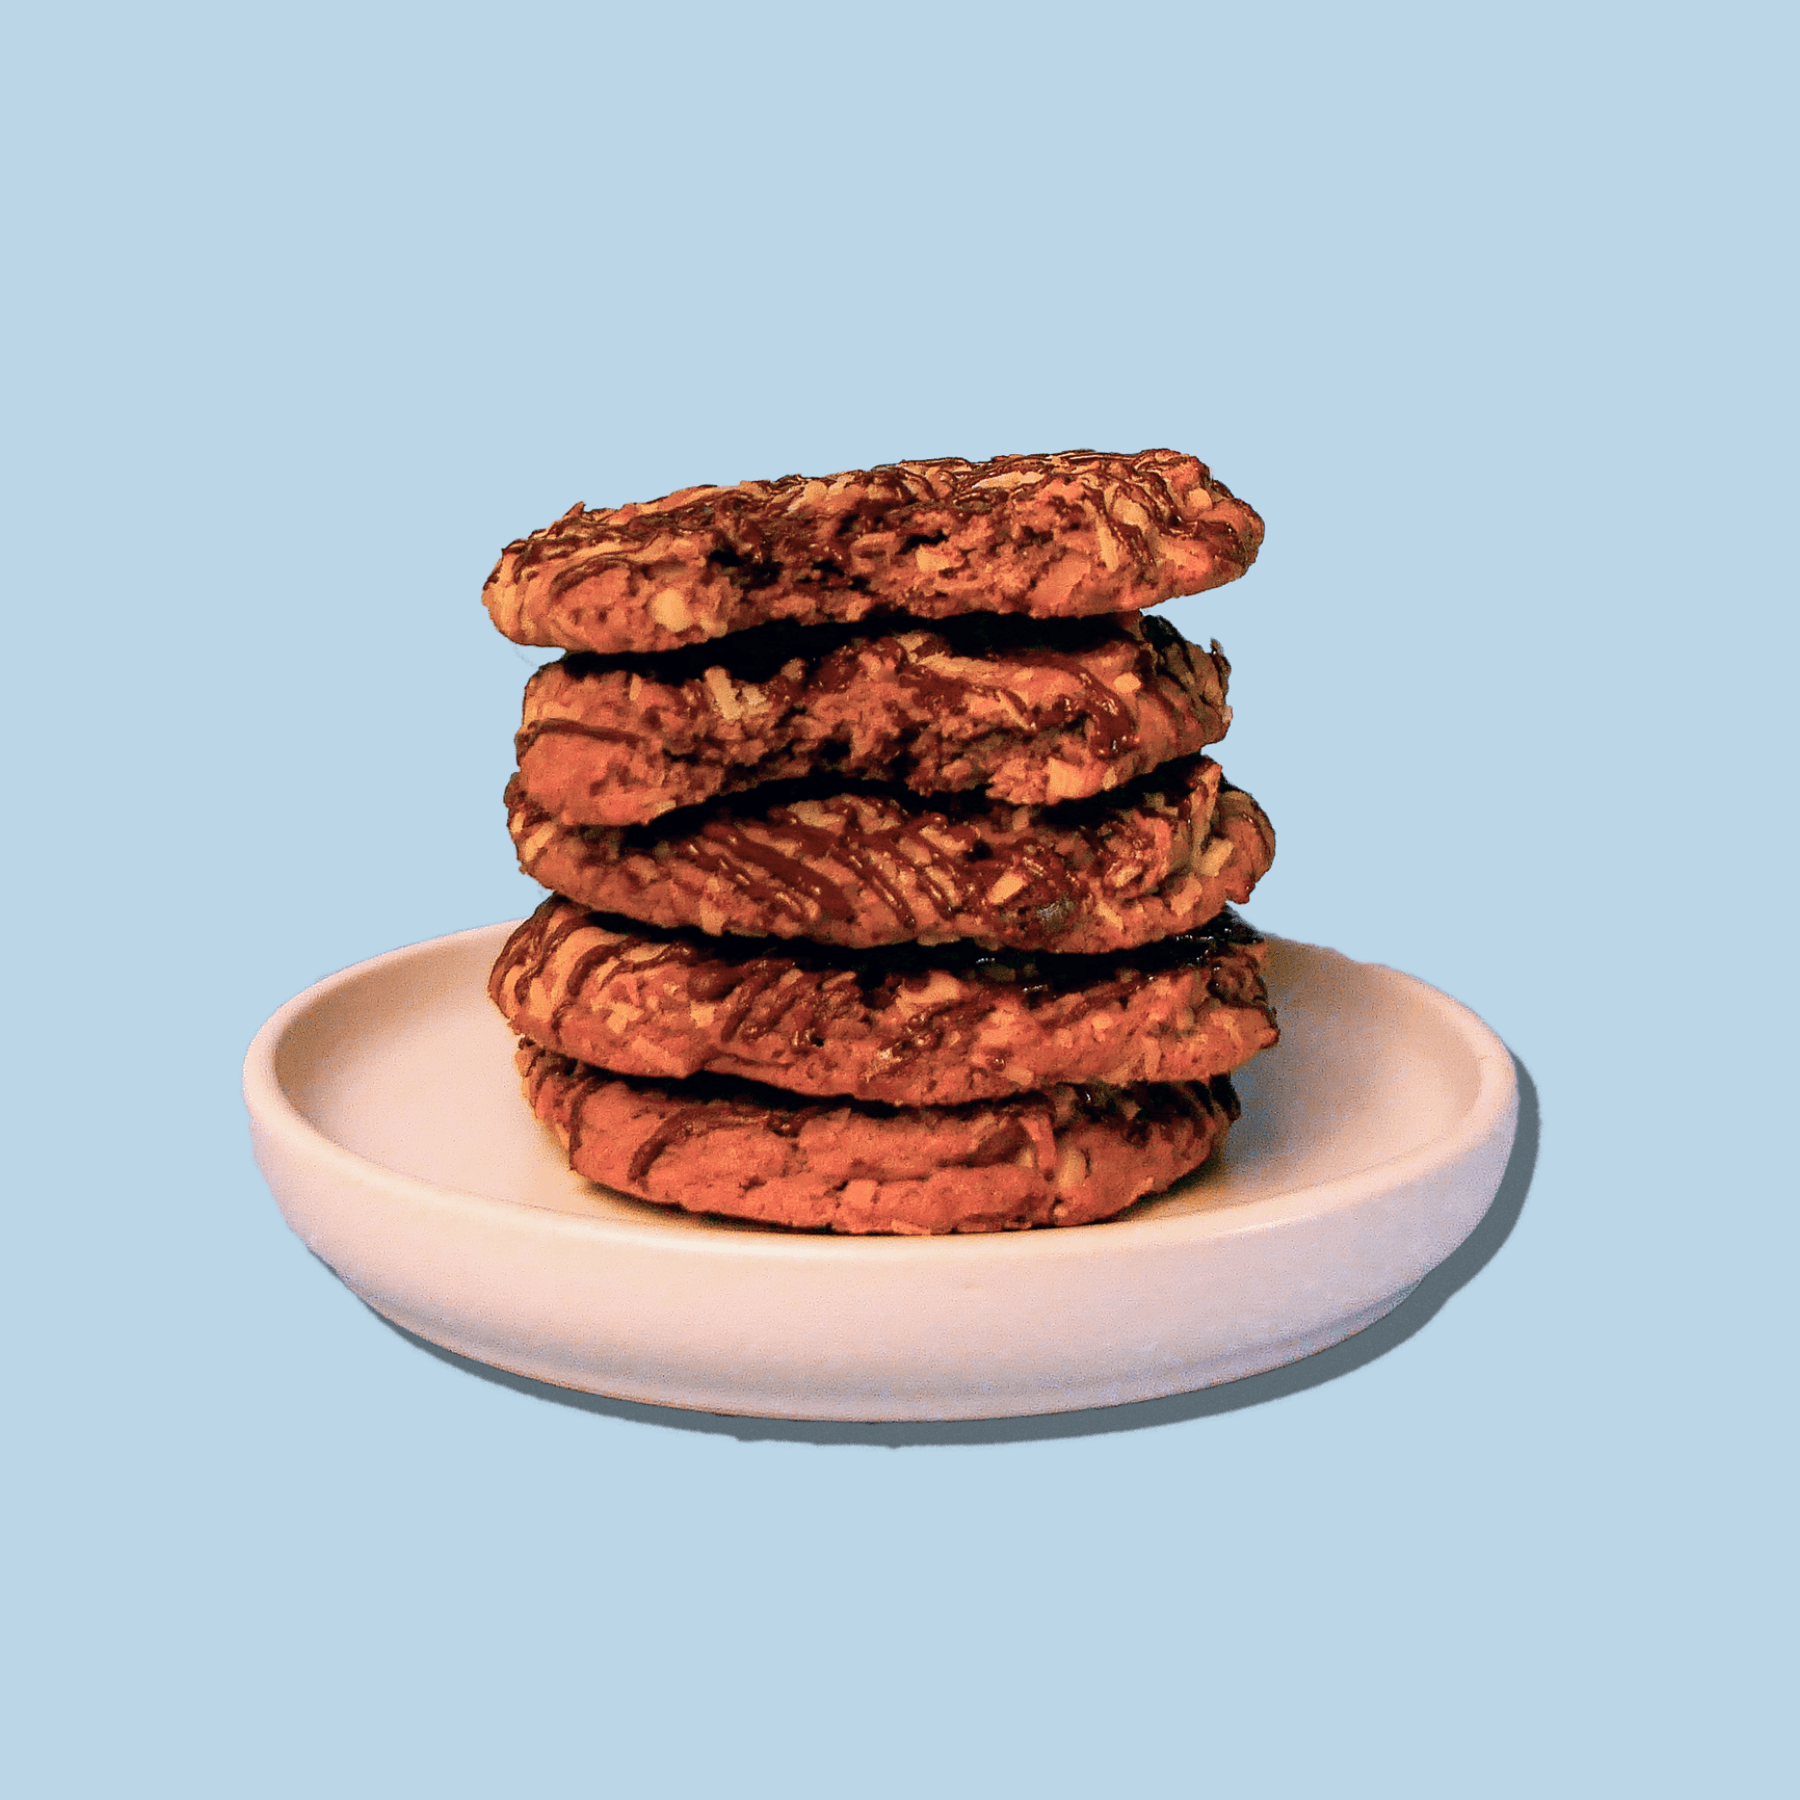 Almond Joyous cookies stacked